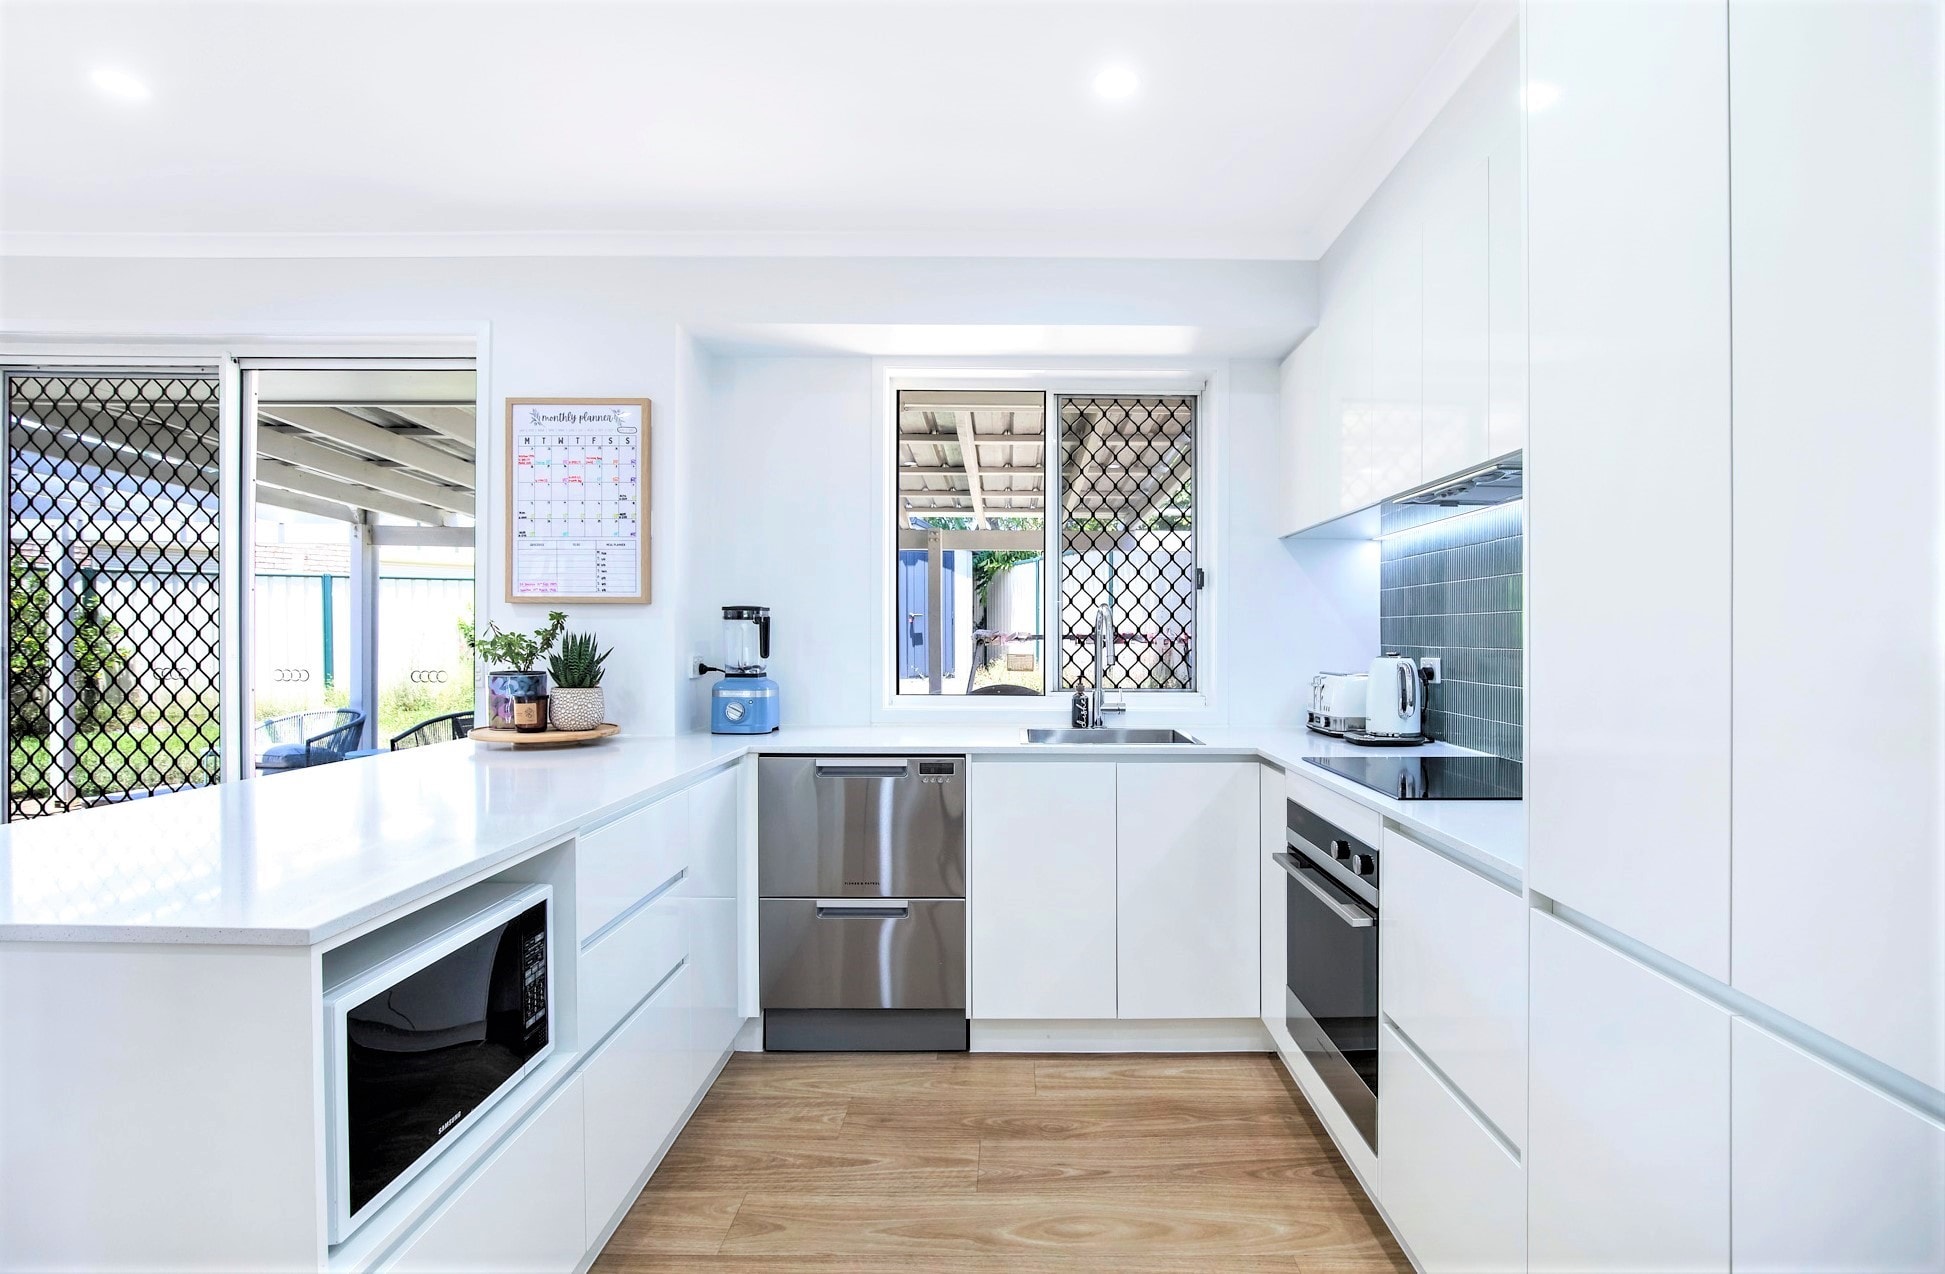 Kitchen renovation in murrumba downs with hidden laundry from Modern Kitchens Northside Brisbane